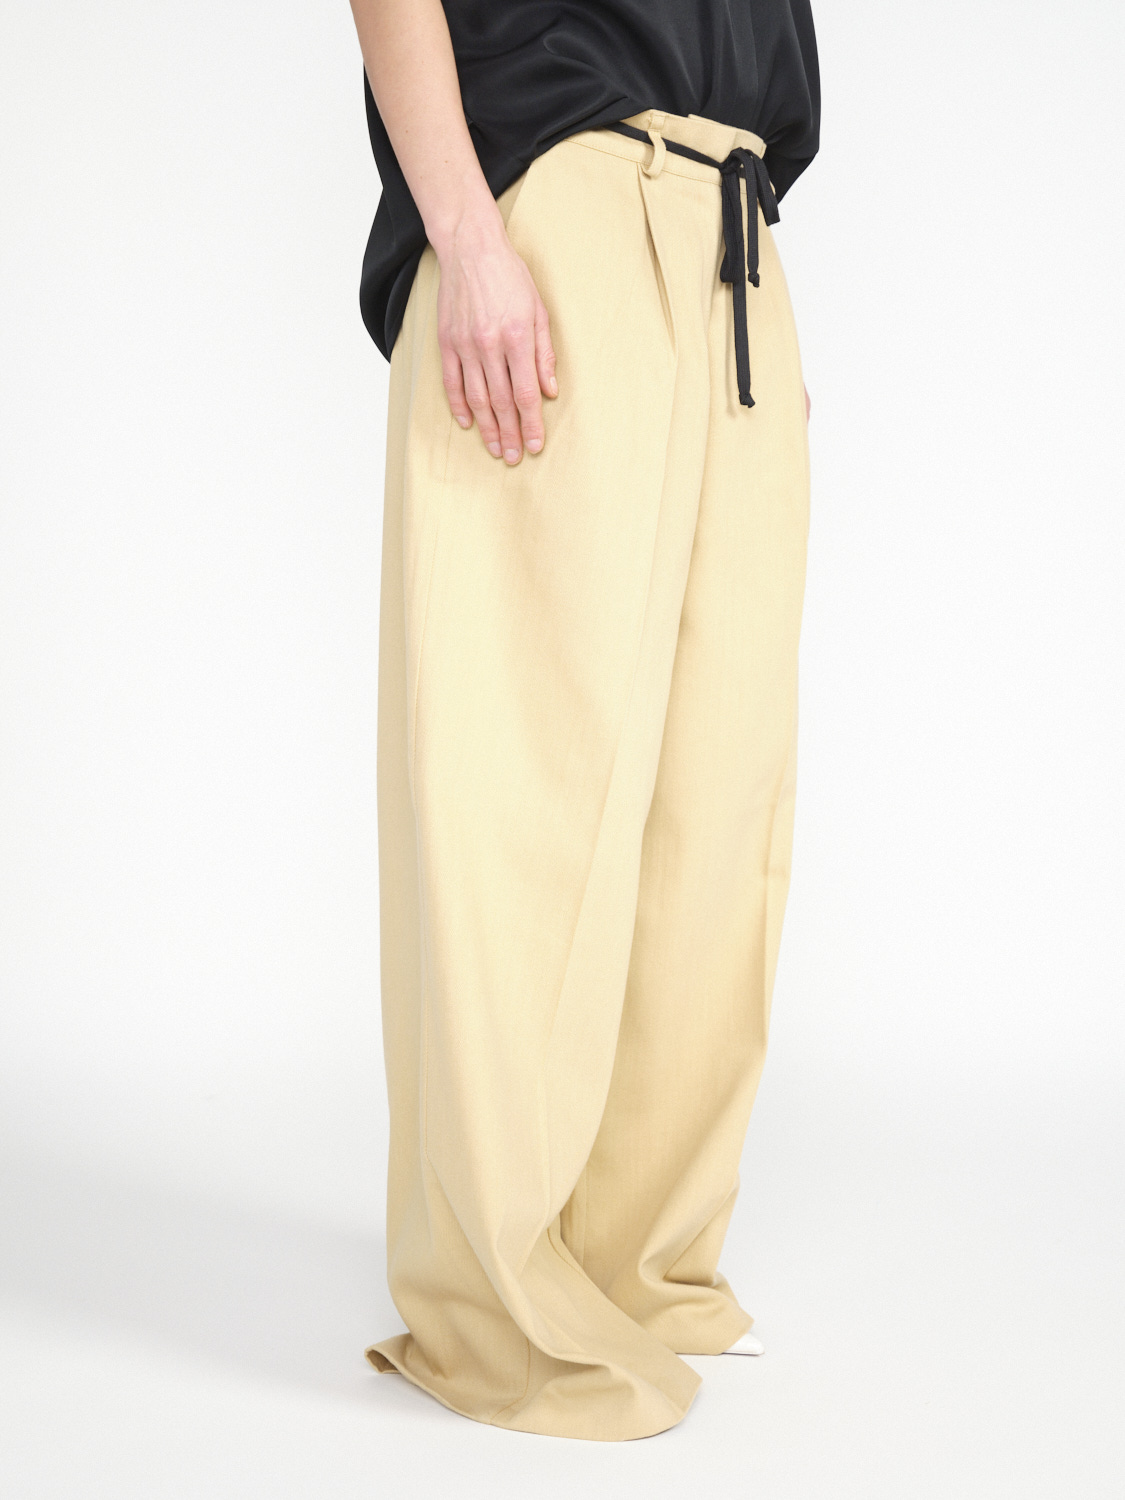 Gitta Banko Pantaloni Jewel - Pantaloni in cotone a gamba larga beige XS/S